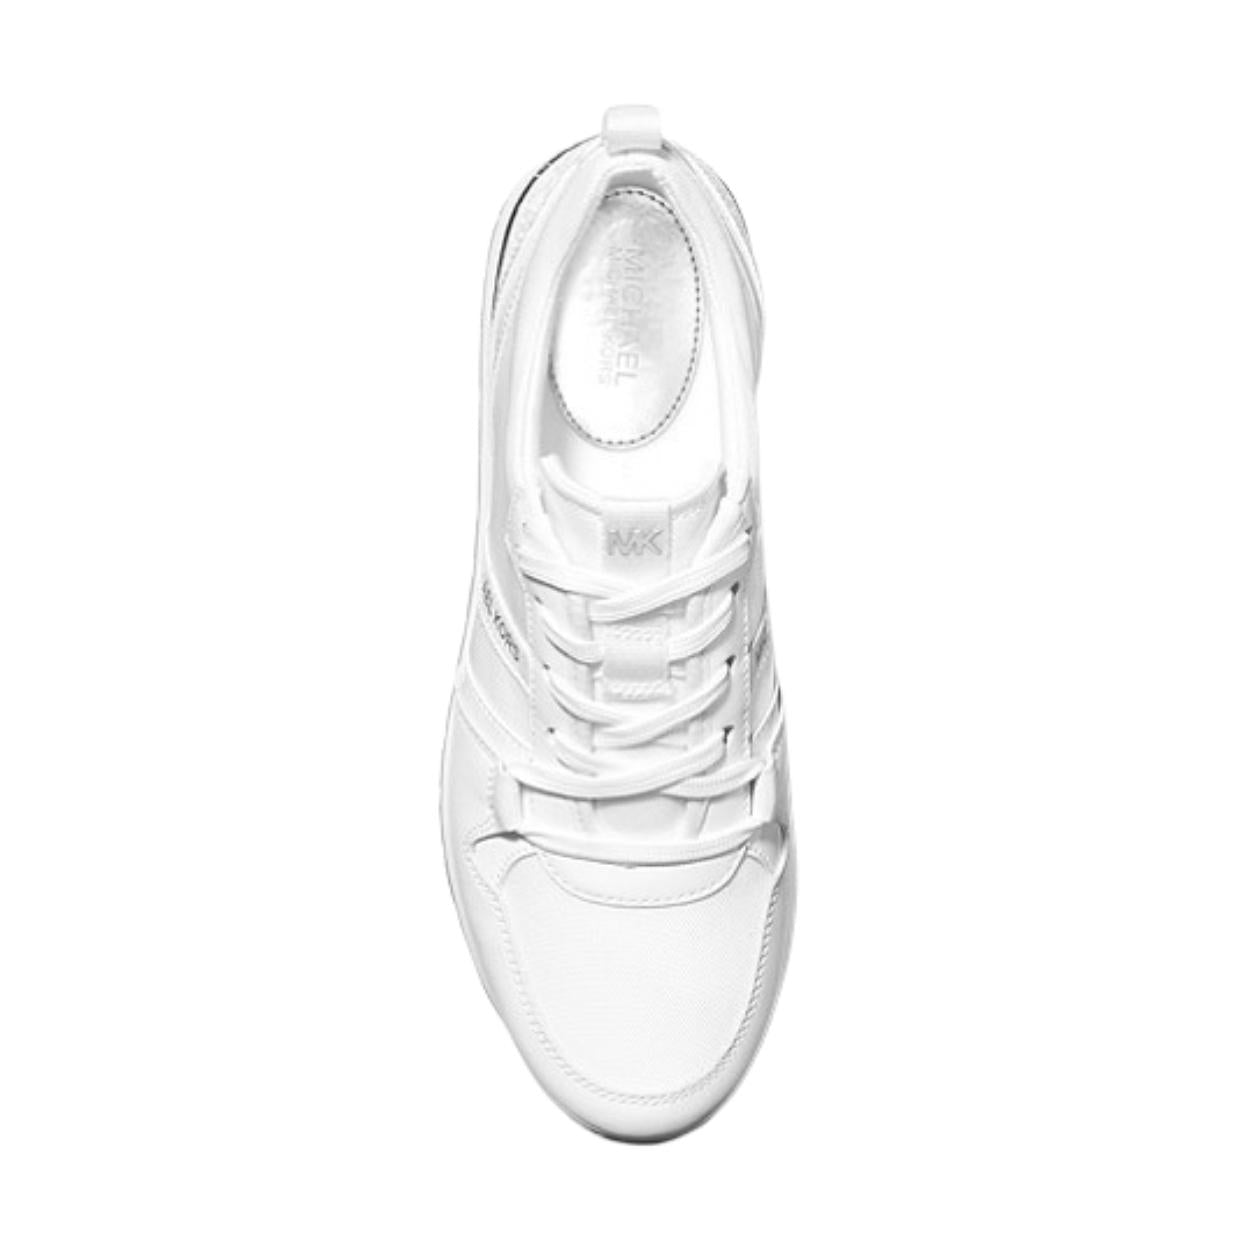 Michael Kors Blue White Sneakers New Size 65 M  eBay